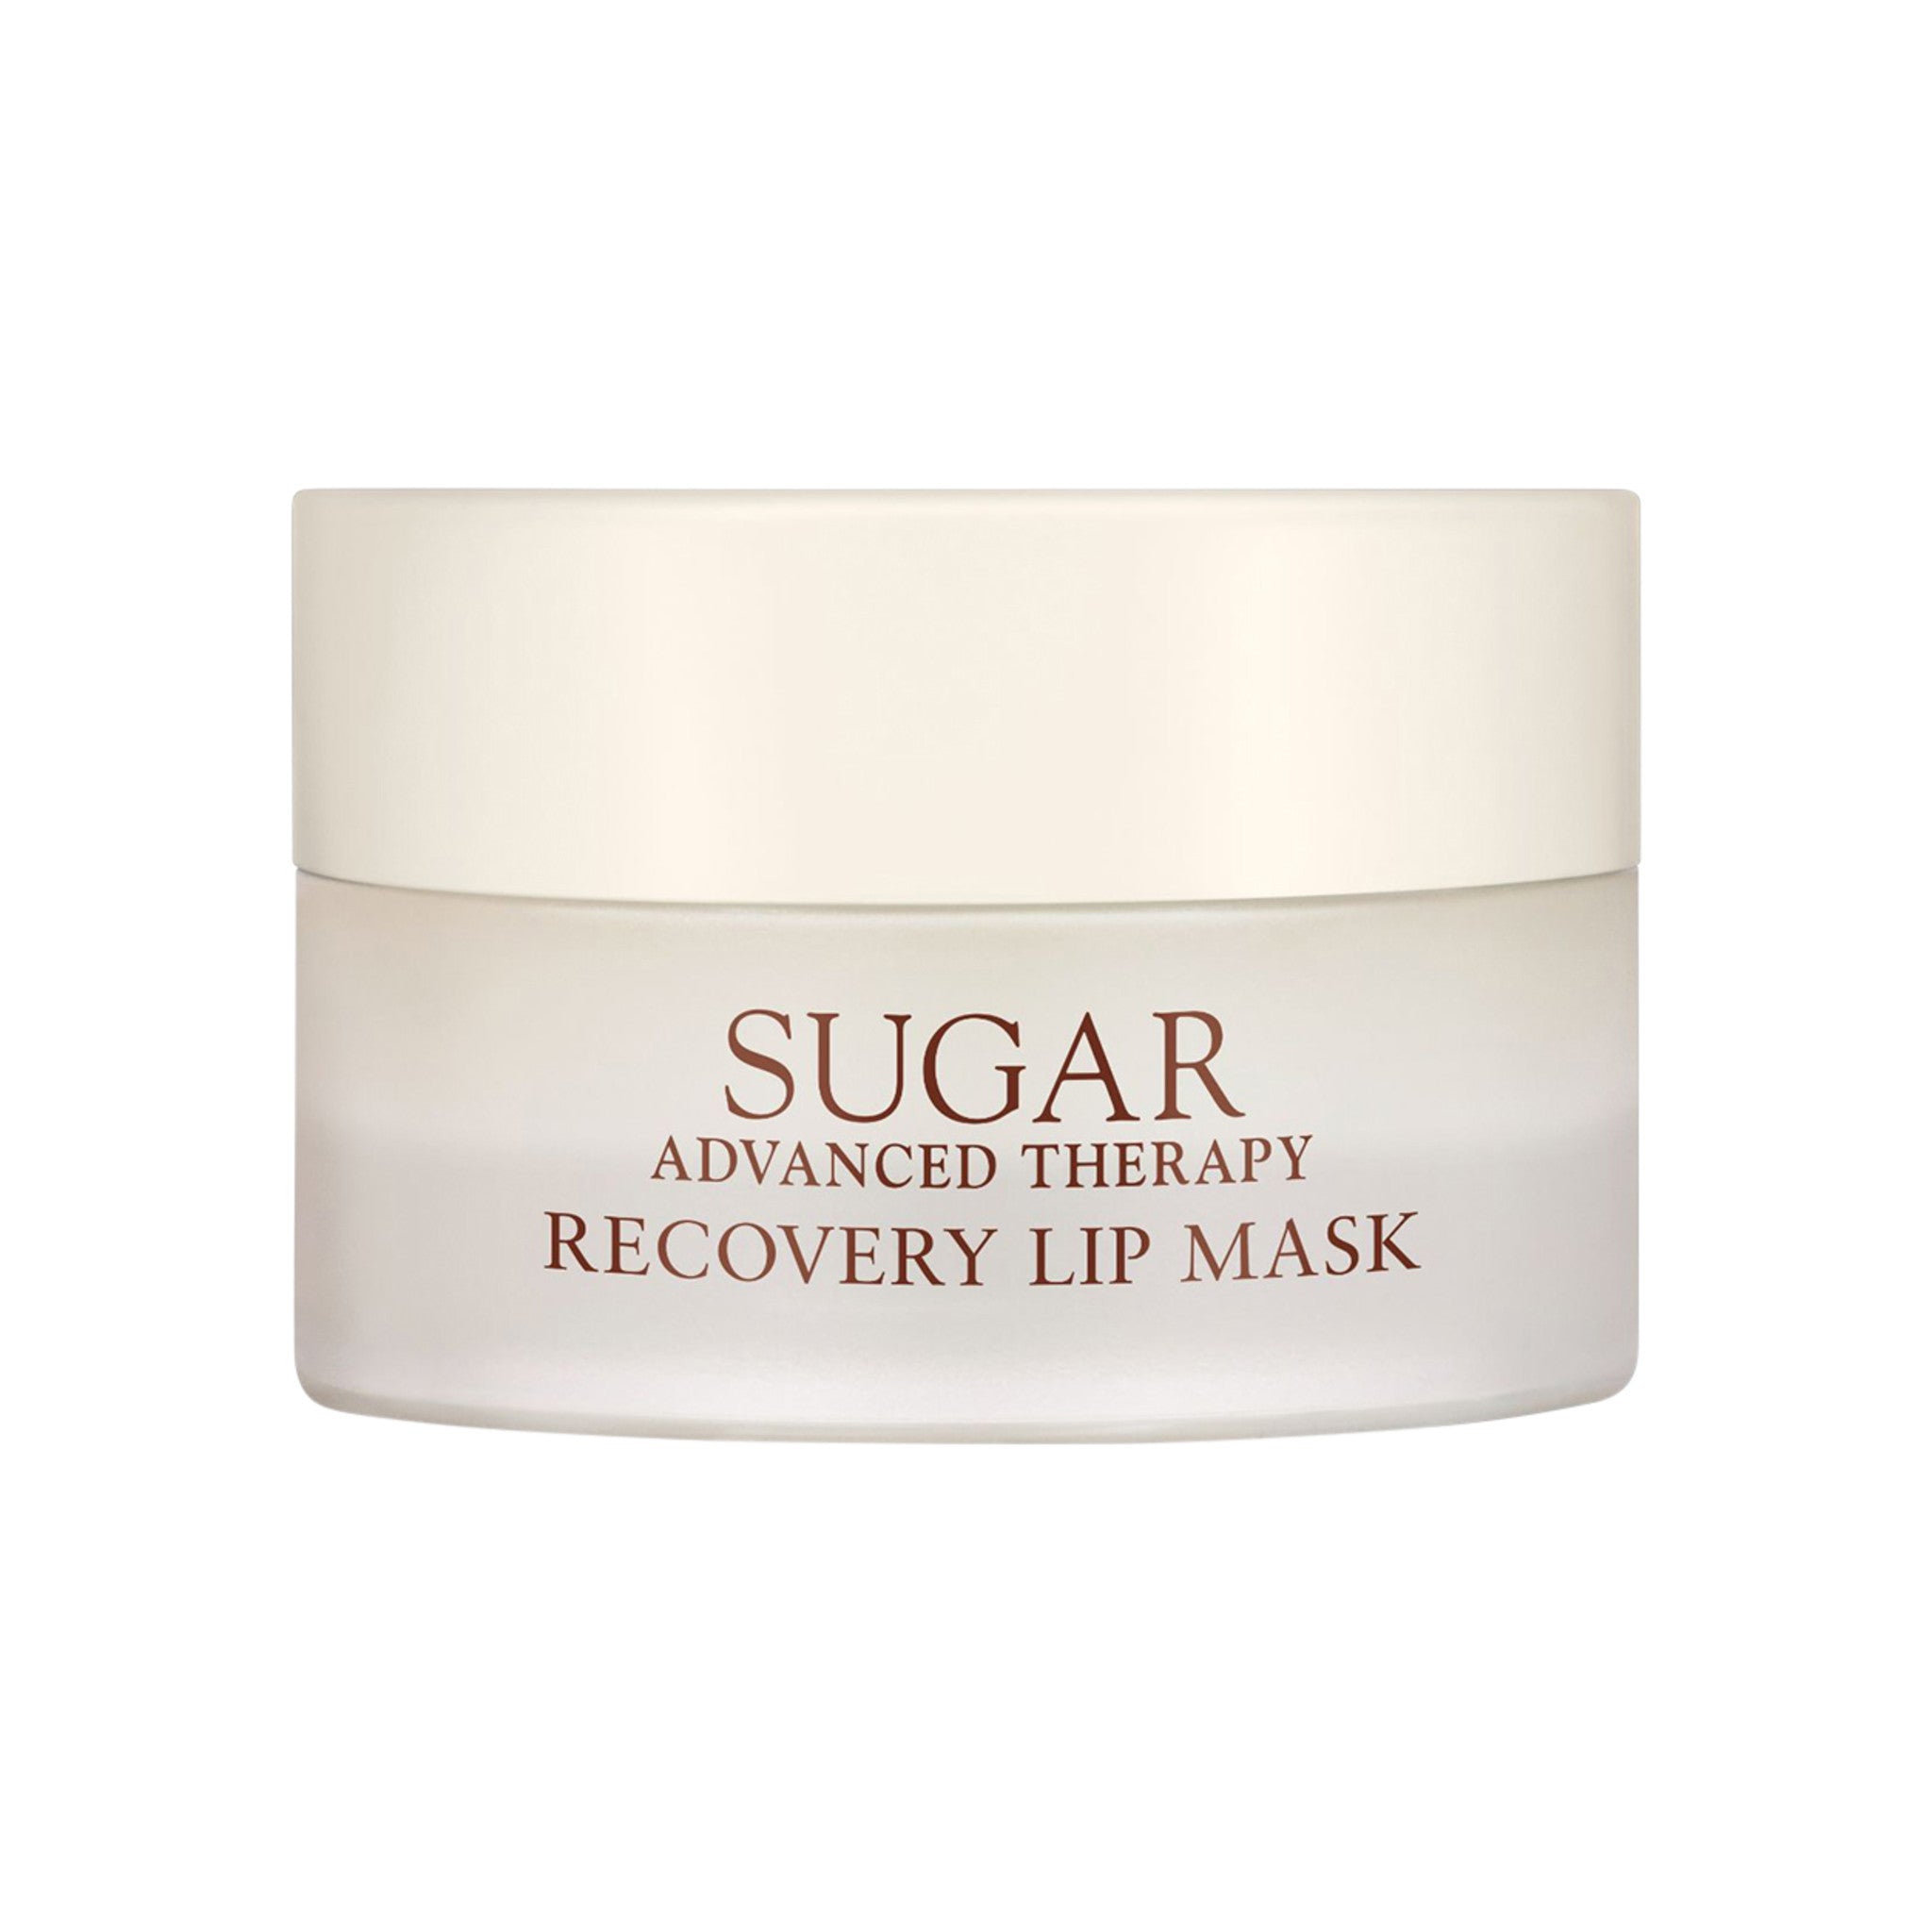 Fresh Sugar Recovery Lip Mask Advanced Therapy main image.